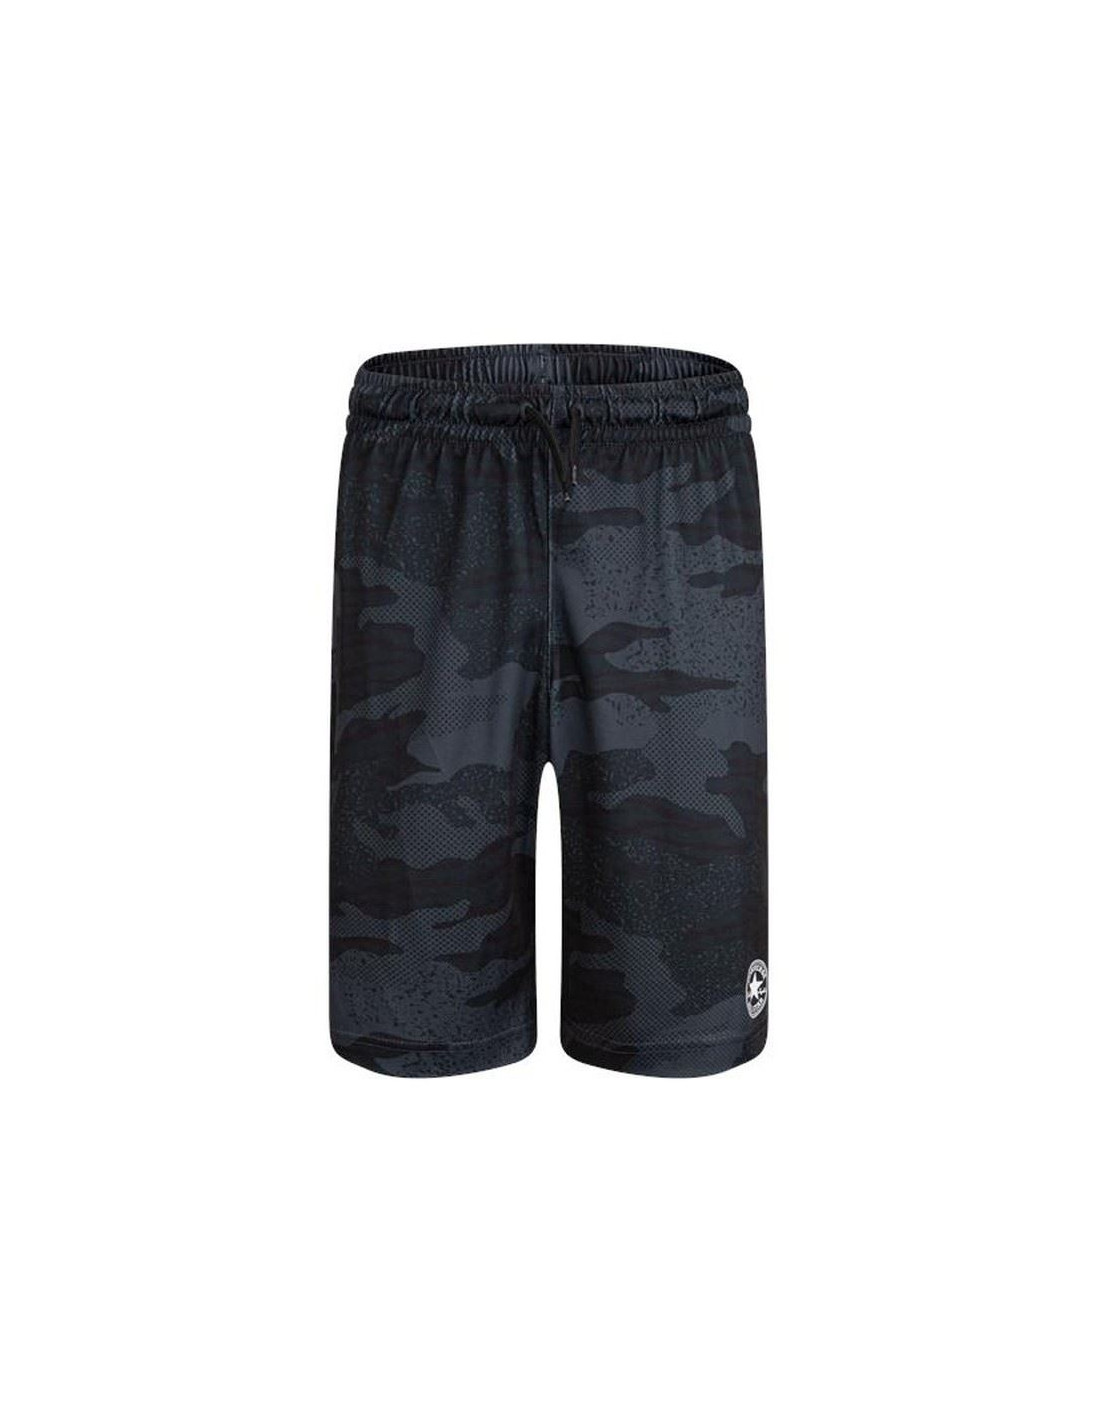 Pantalones sportswear converse jungle camo aop mesh